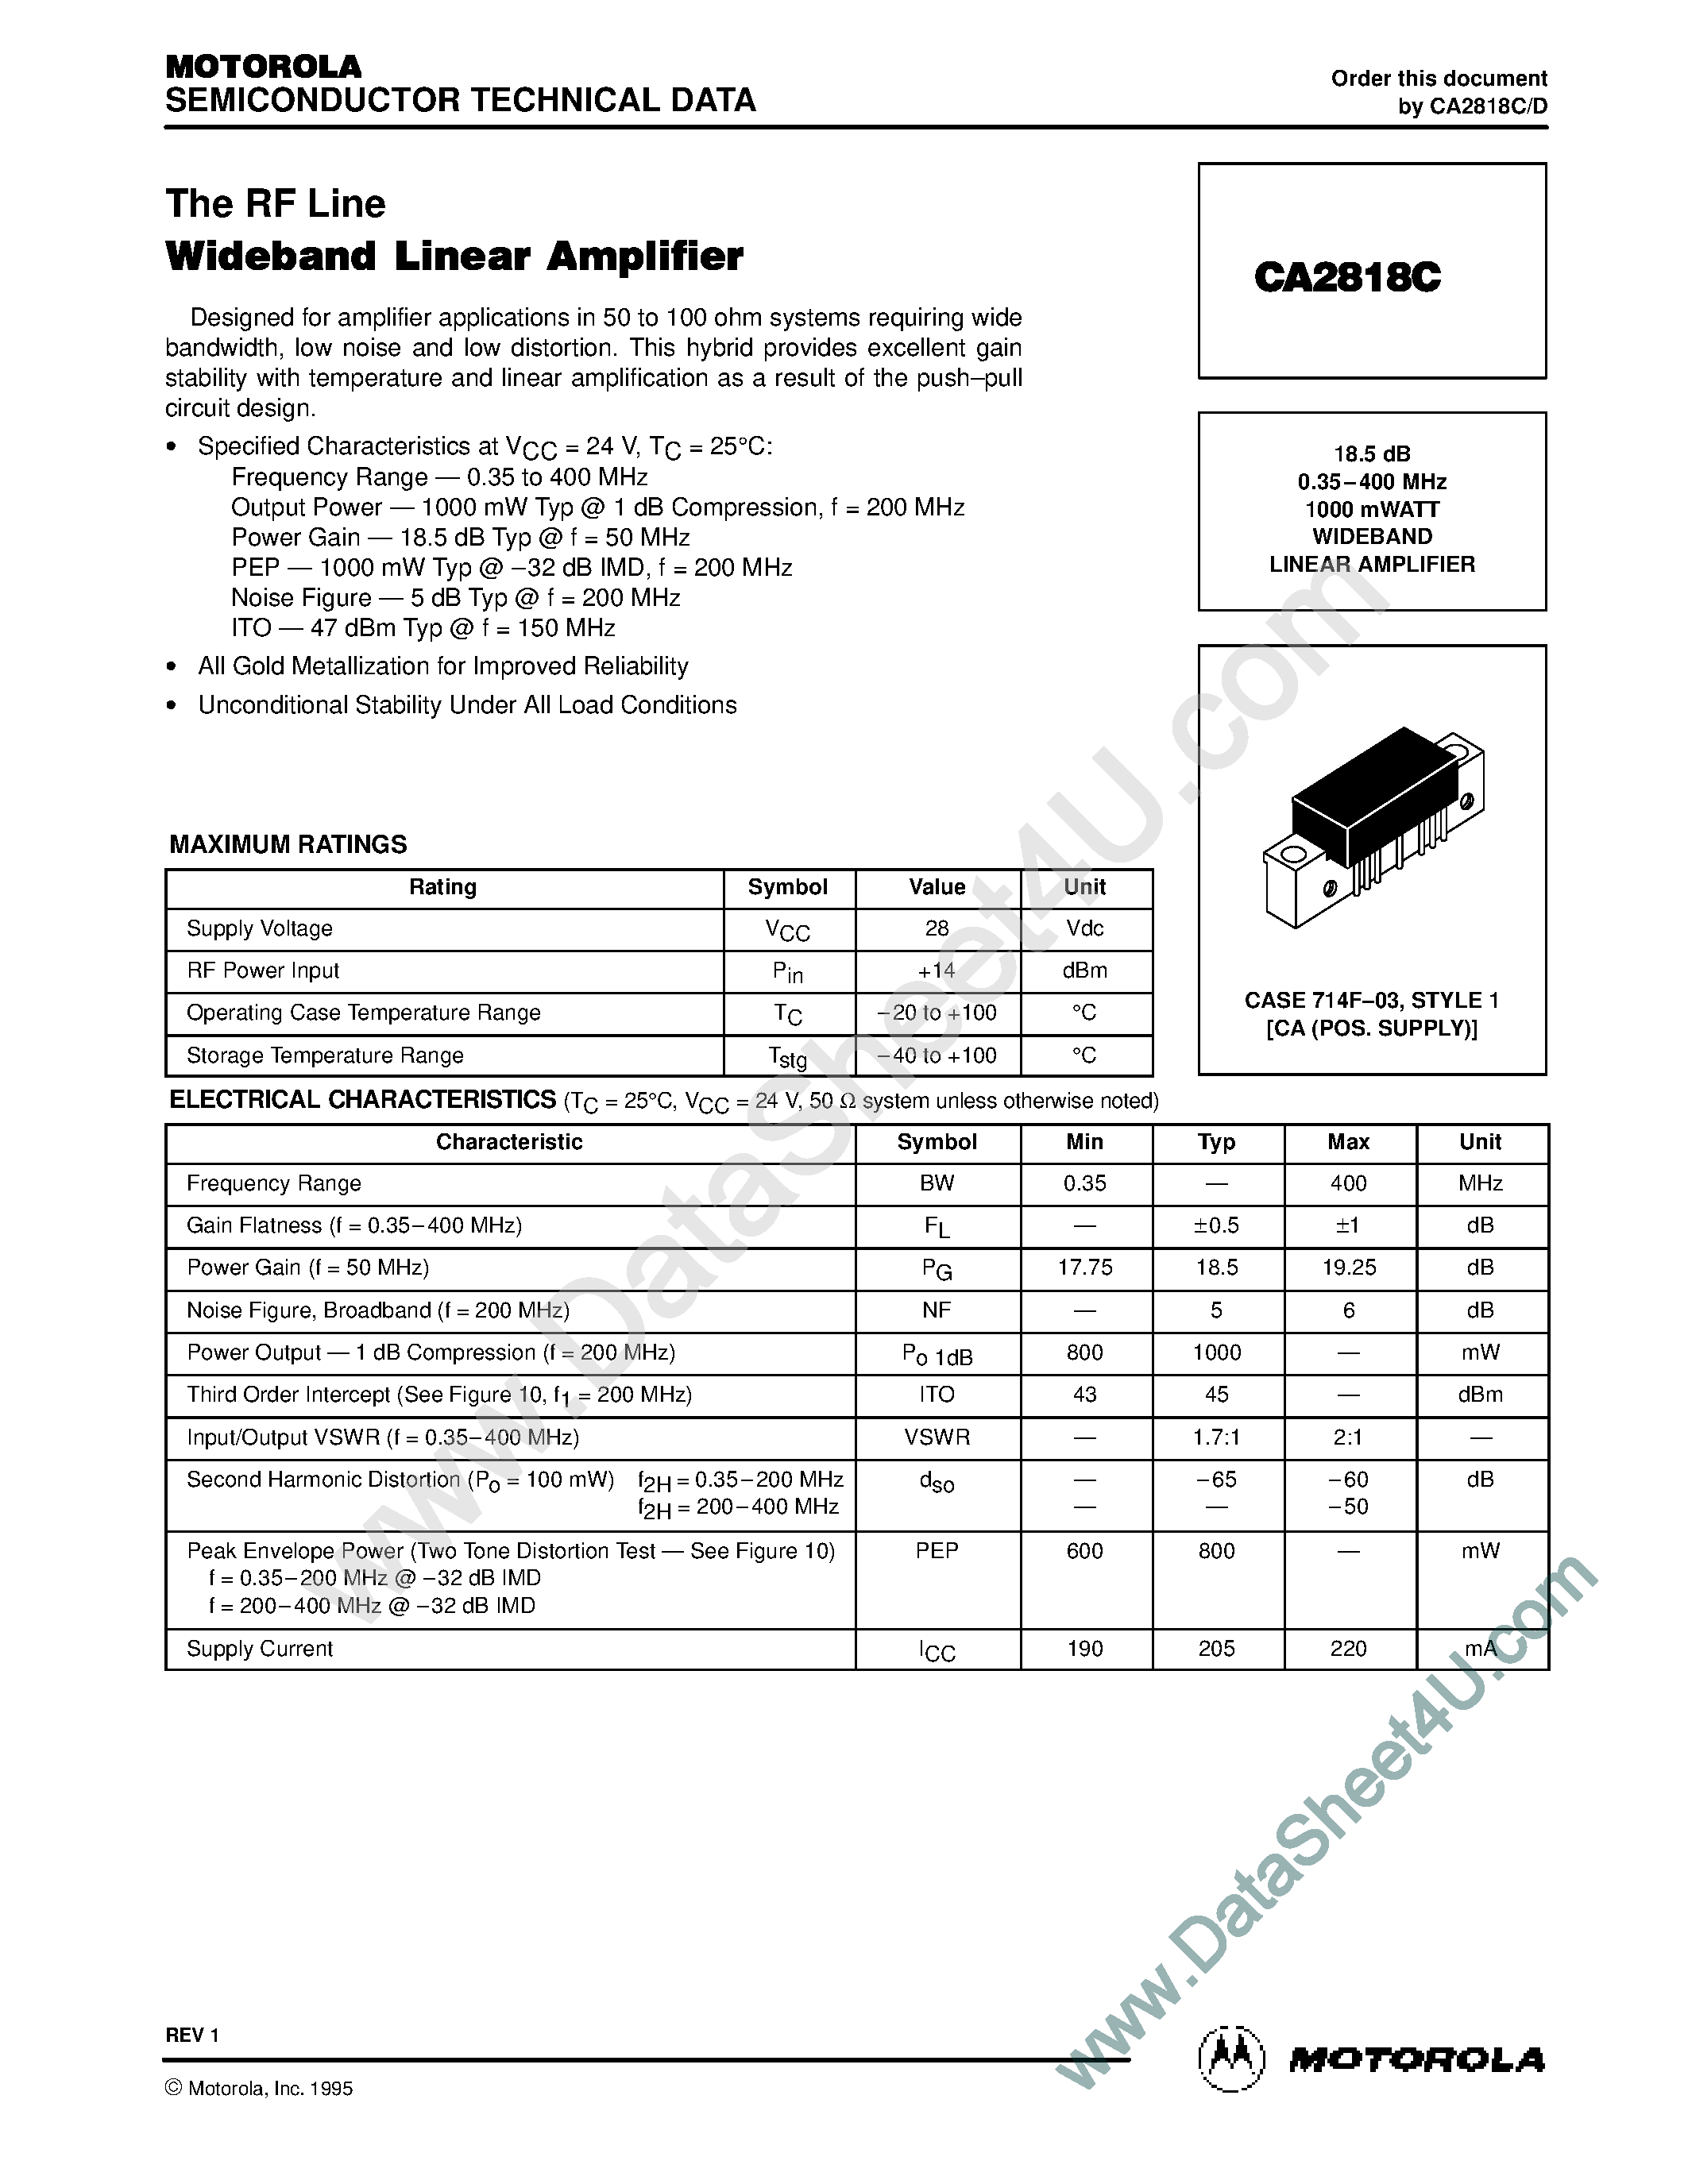 Datasheet CA2818C - 18.5 dB 0.35-400 MHz 1000 mWATT WIDEBAND LINEAR AMPLIFIER page 1